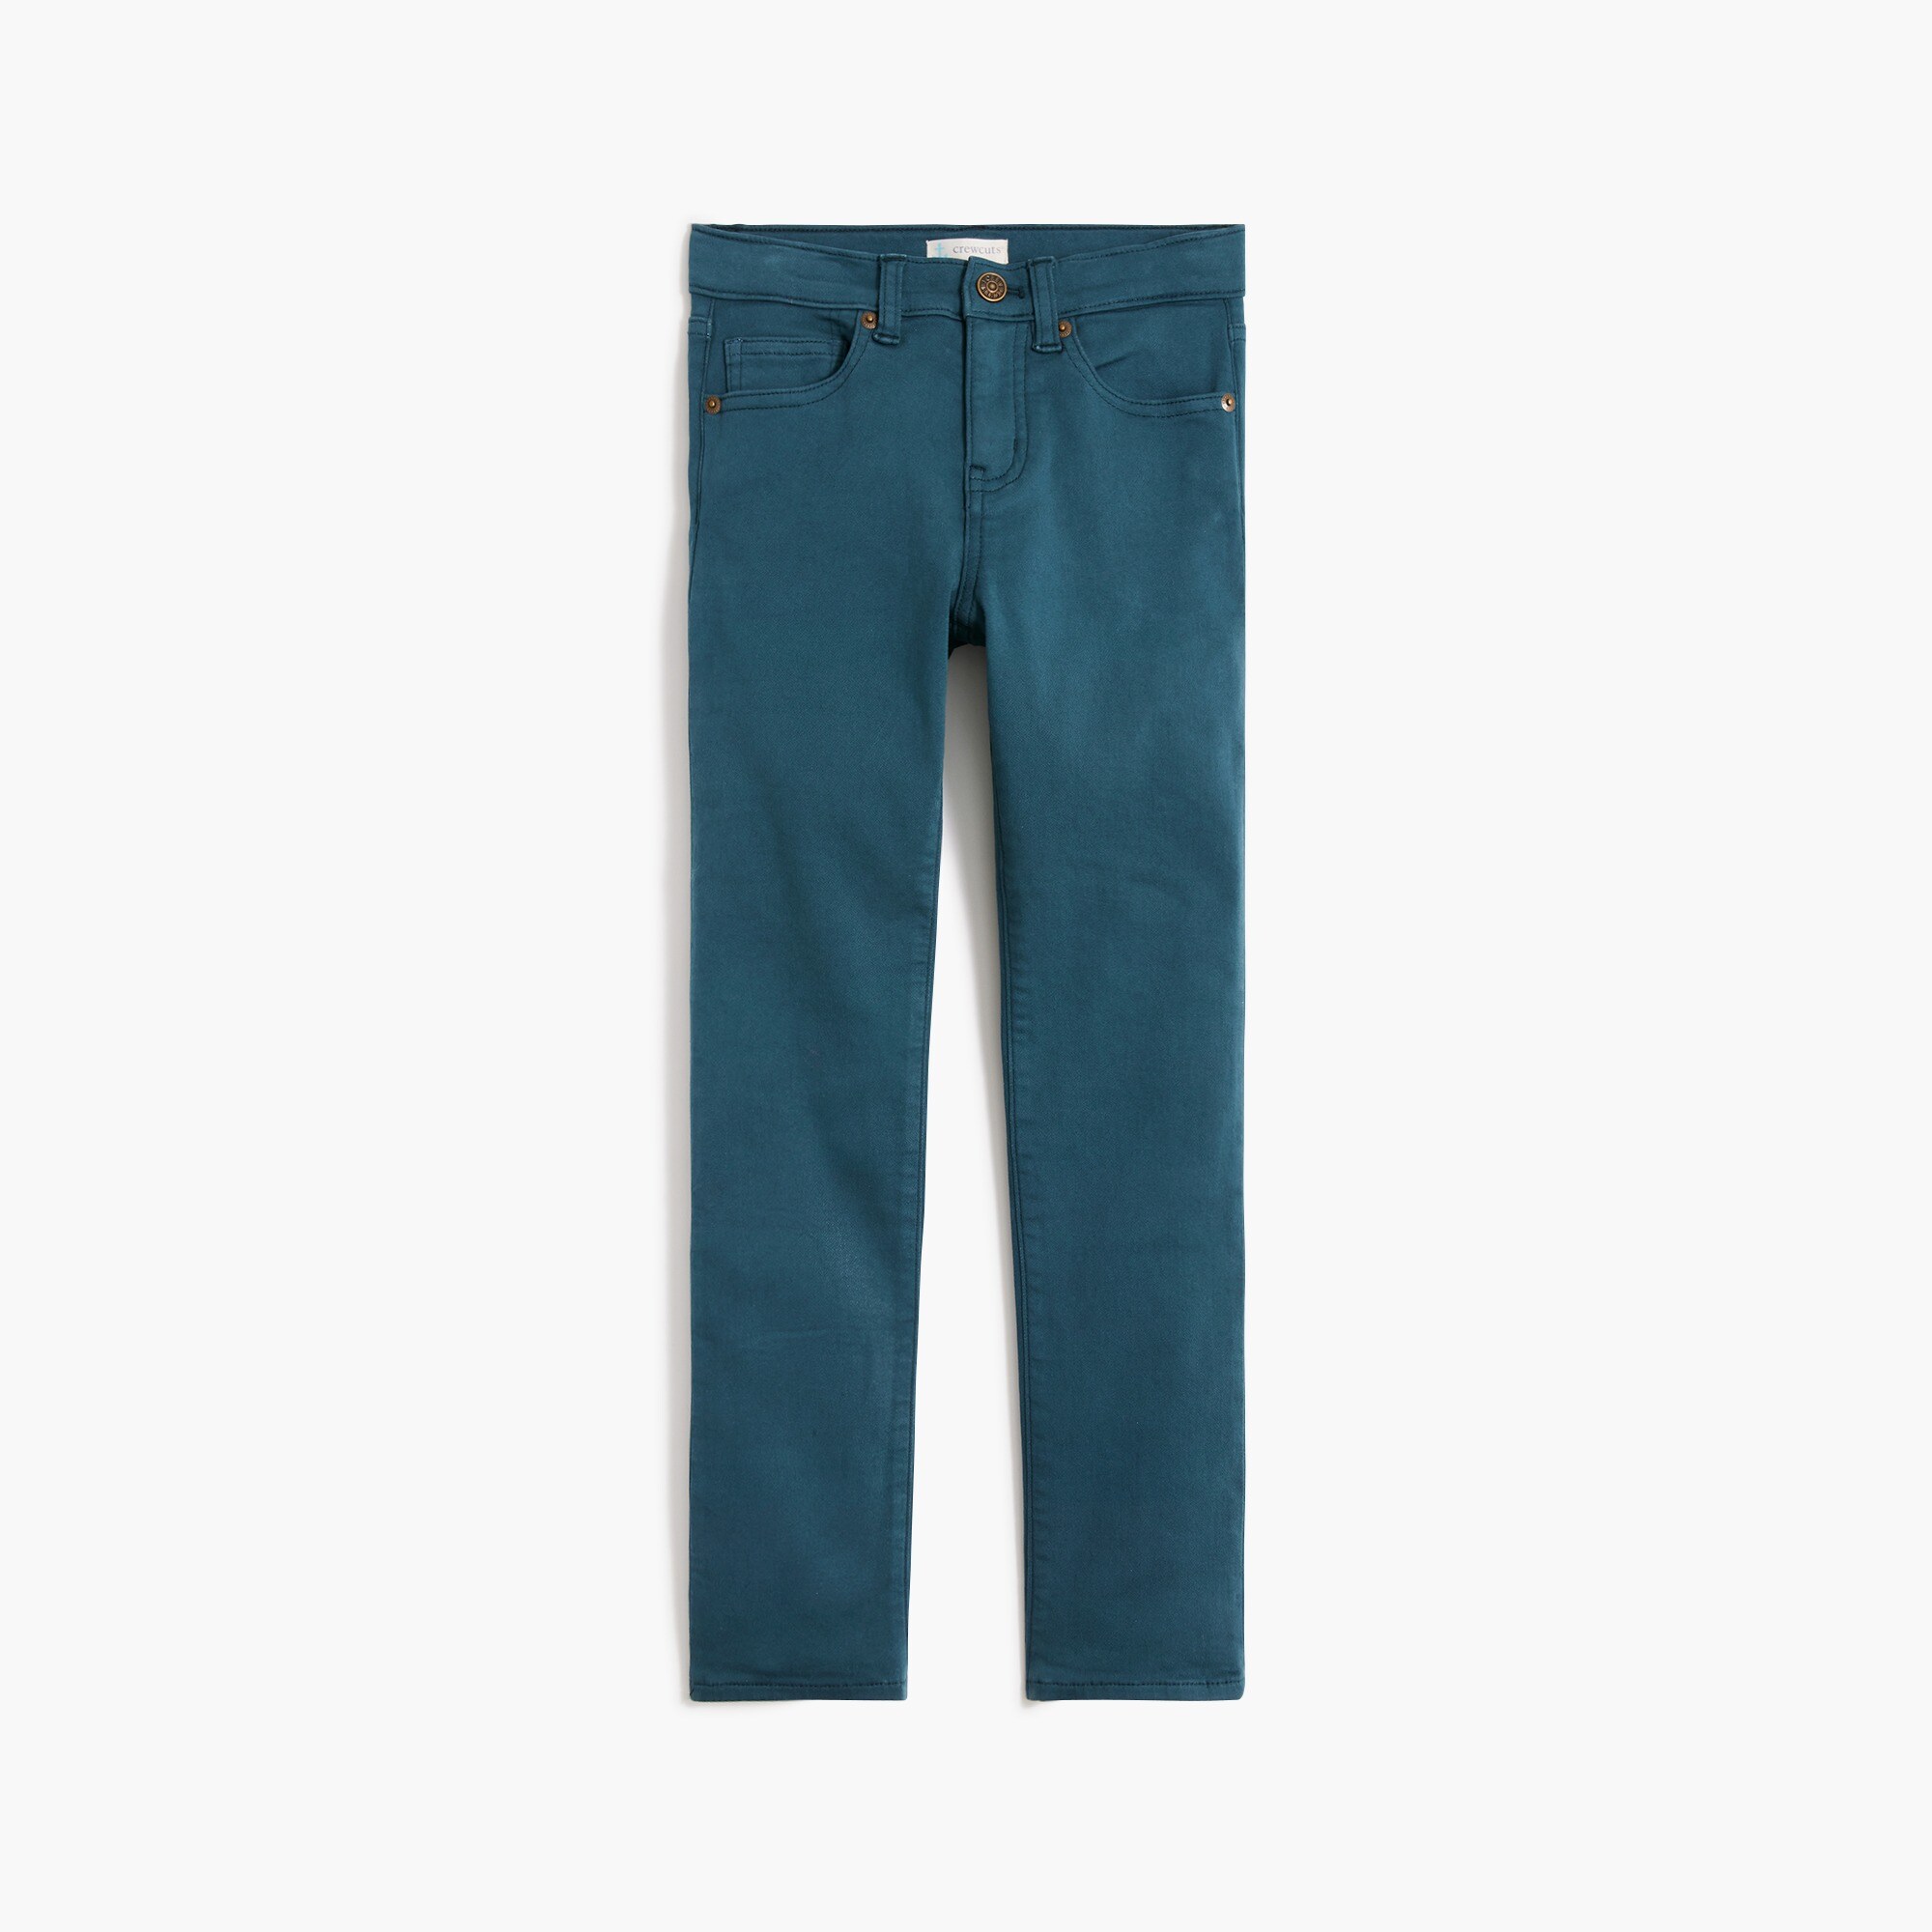  Boys' slim-fit garment-dyed jean